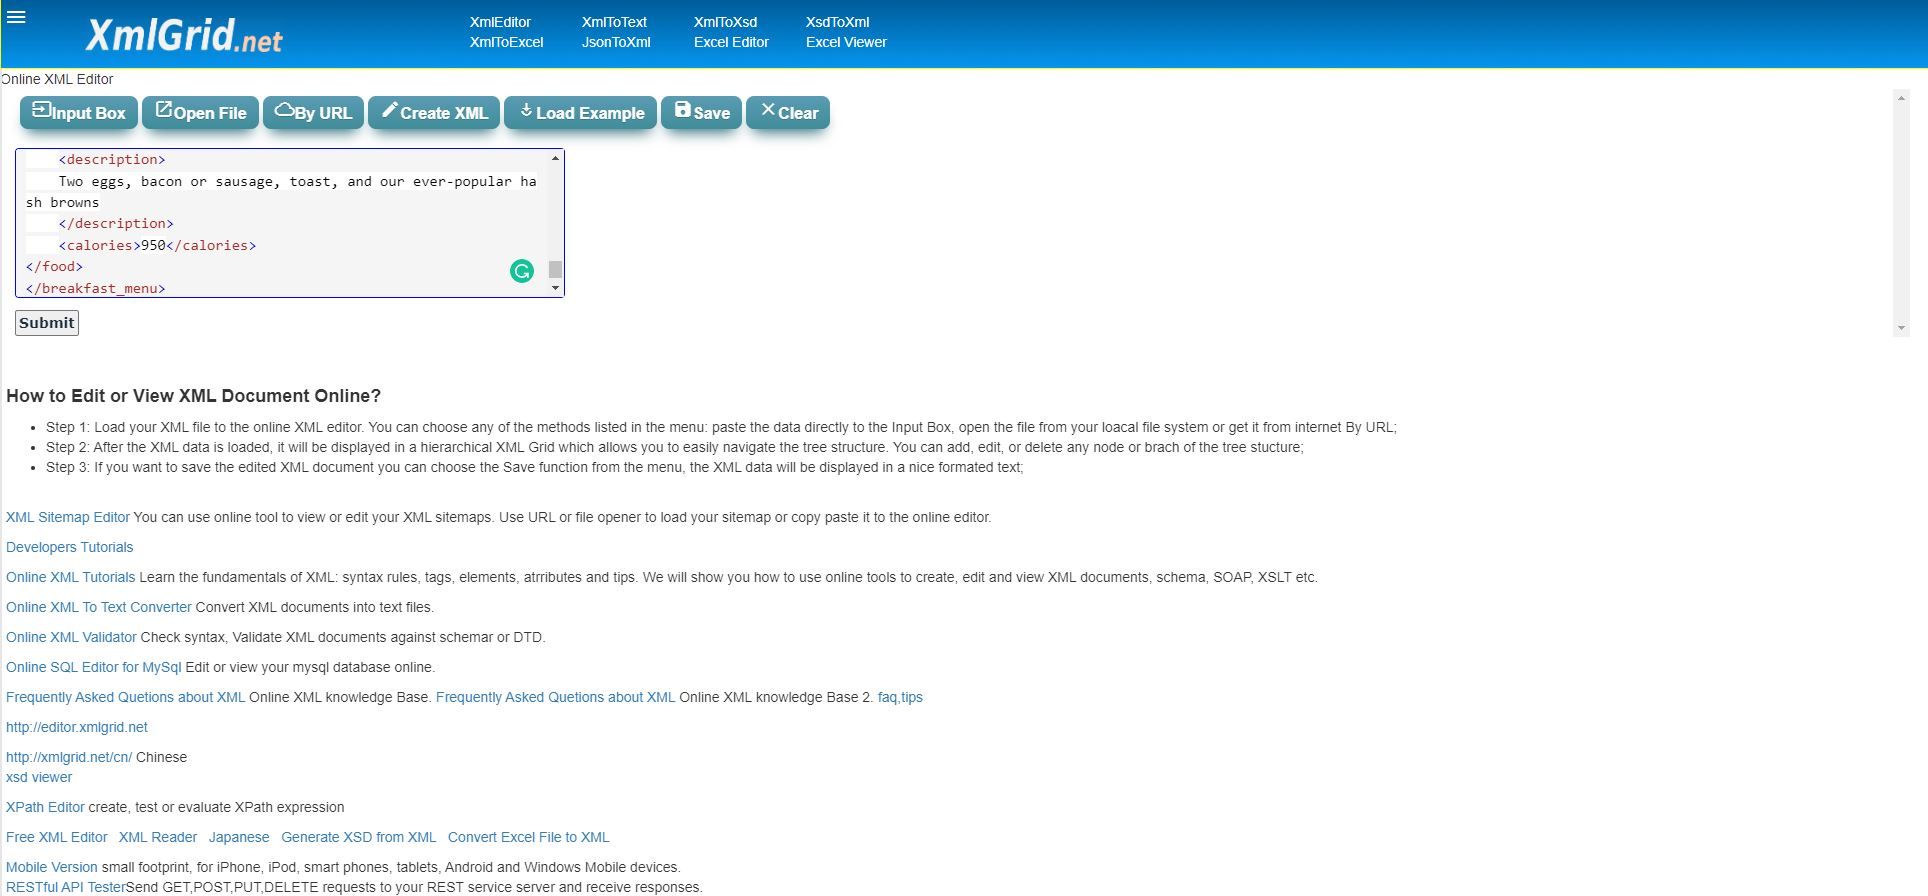 A Screenshot of the XMLGrid net XML Editor in Use